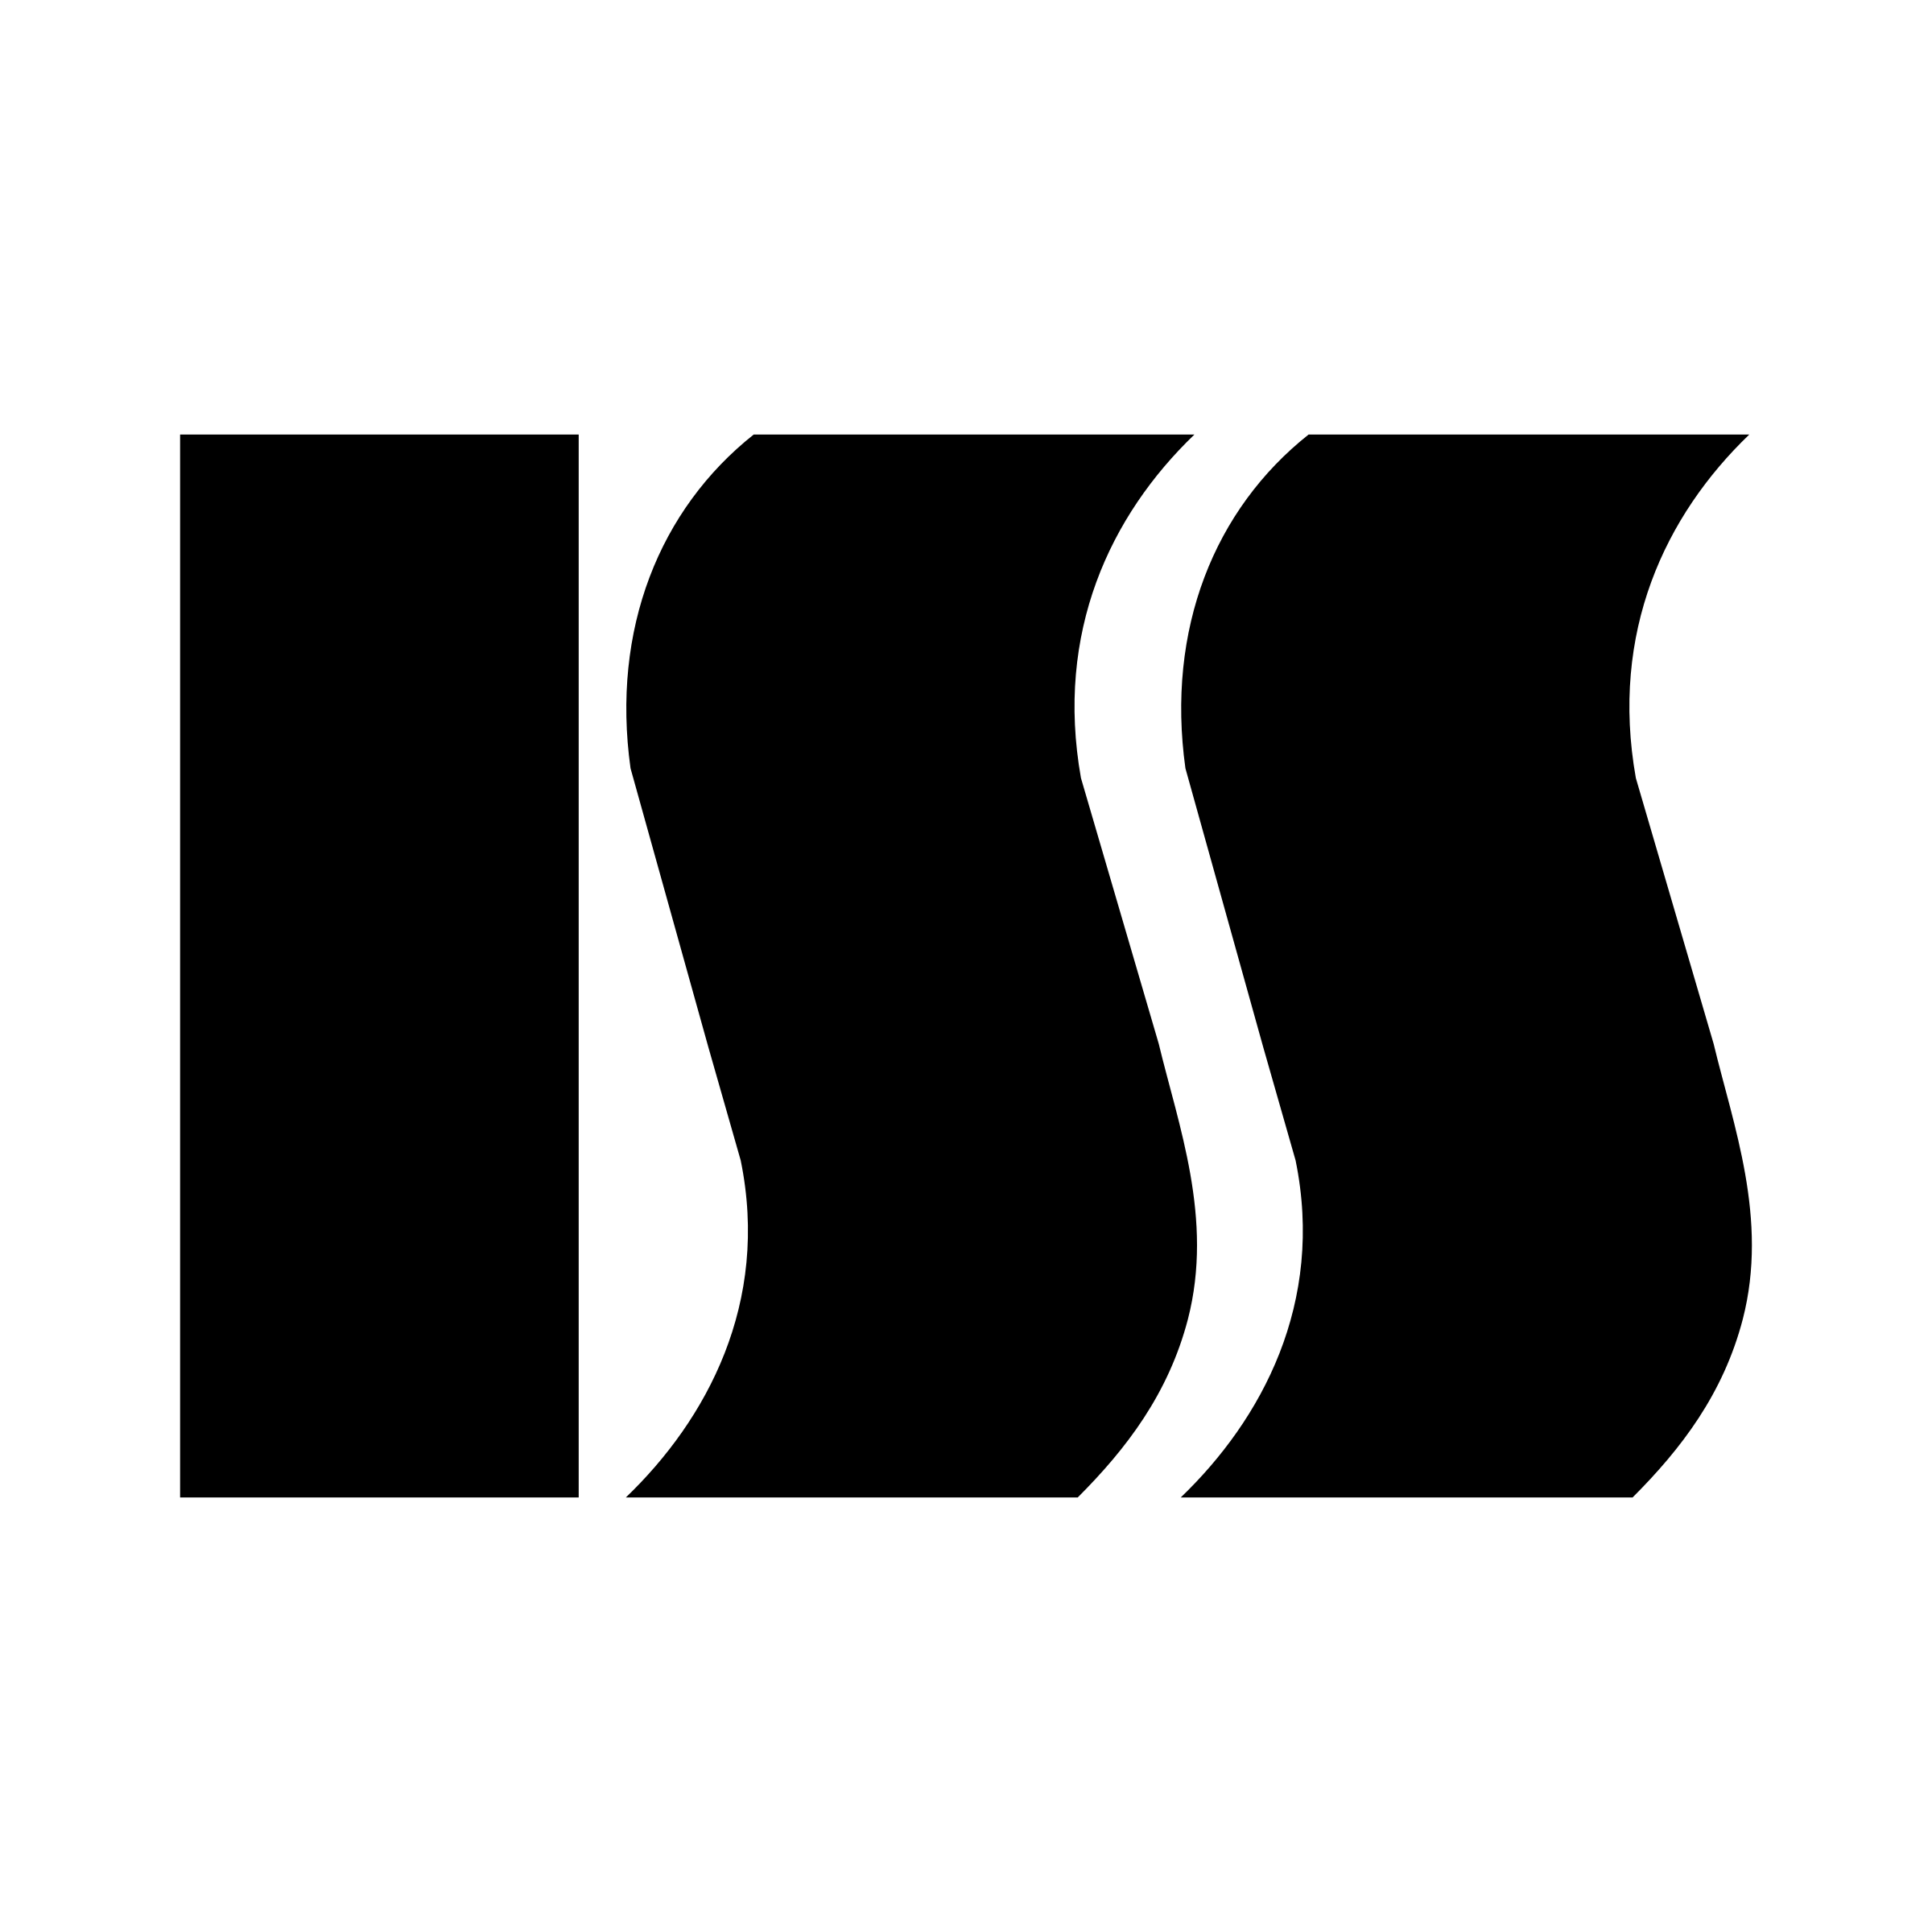 ISS Logo PNG Transparent & SVG Vector.